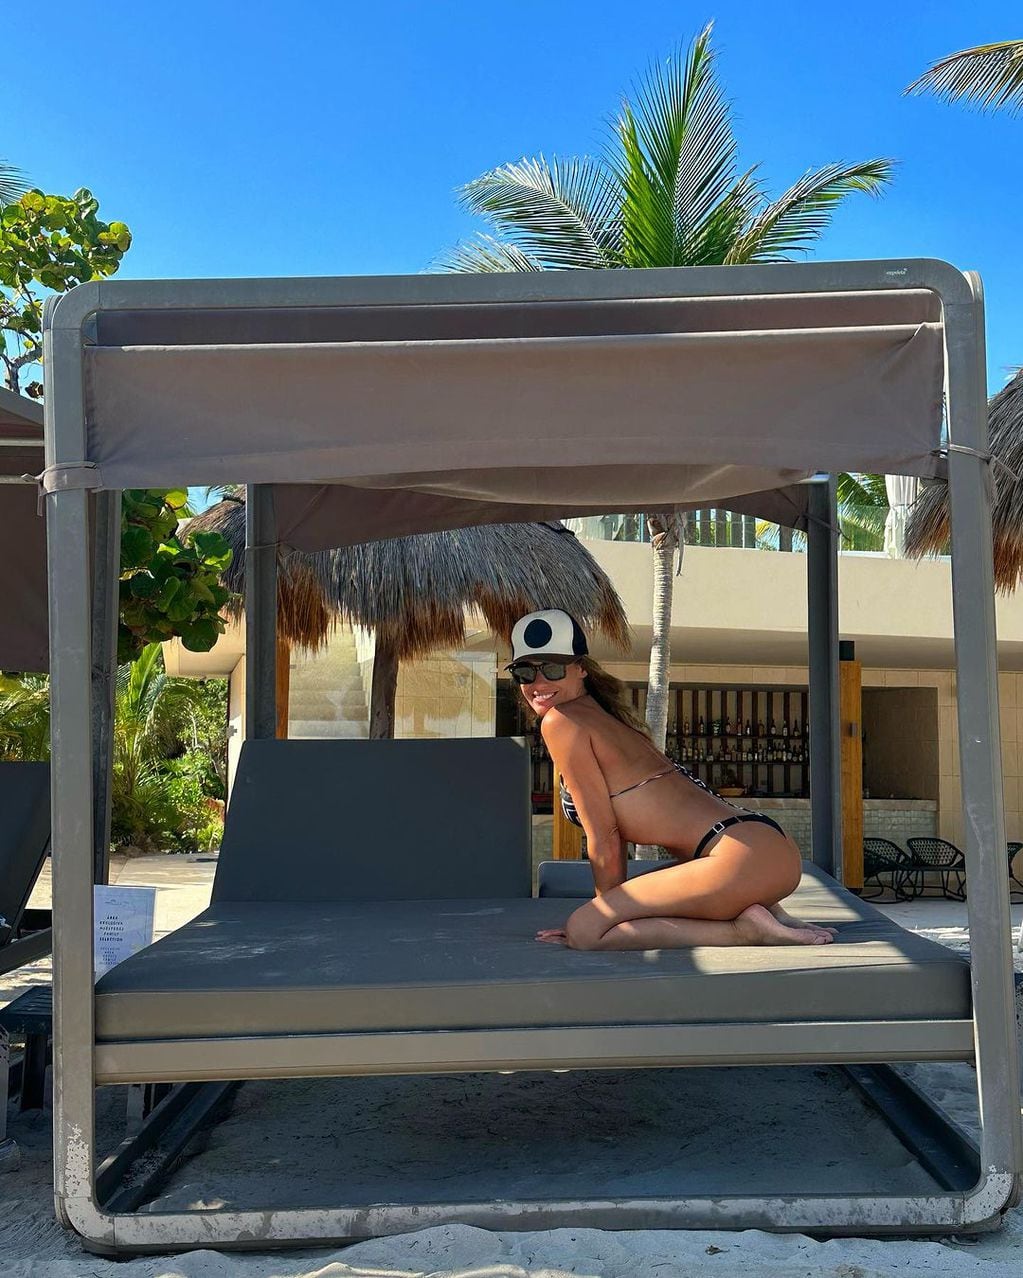 Pampita lució una bikini xxs y paralizó las playas de México